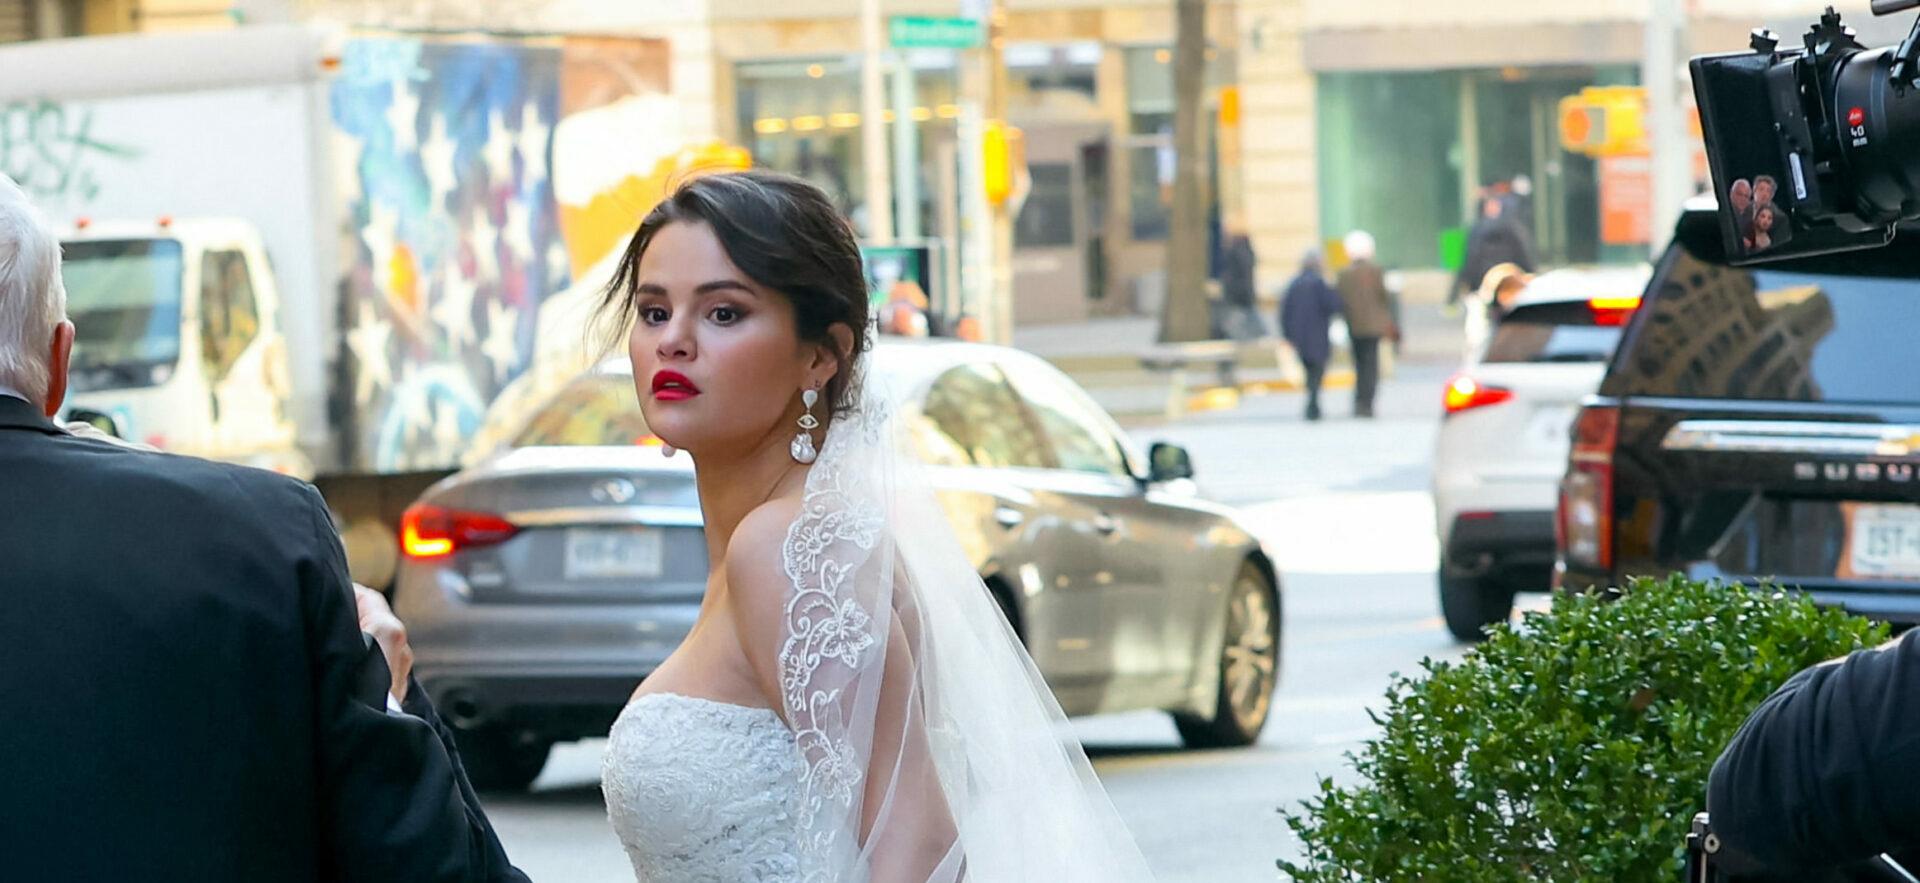 Hailey Bieber Shares Behind-The-Scenes Photos Of Wedding Dress